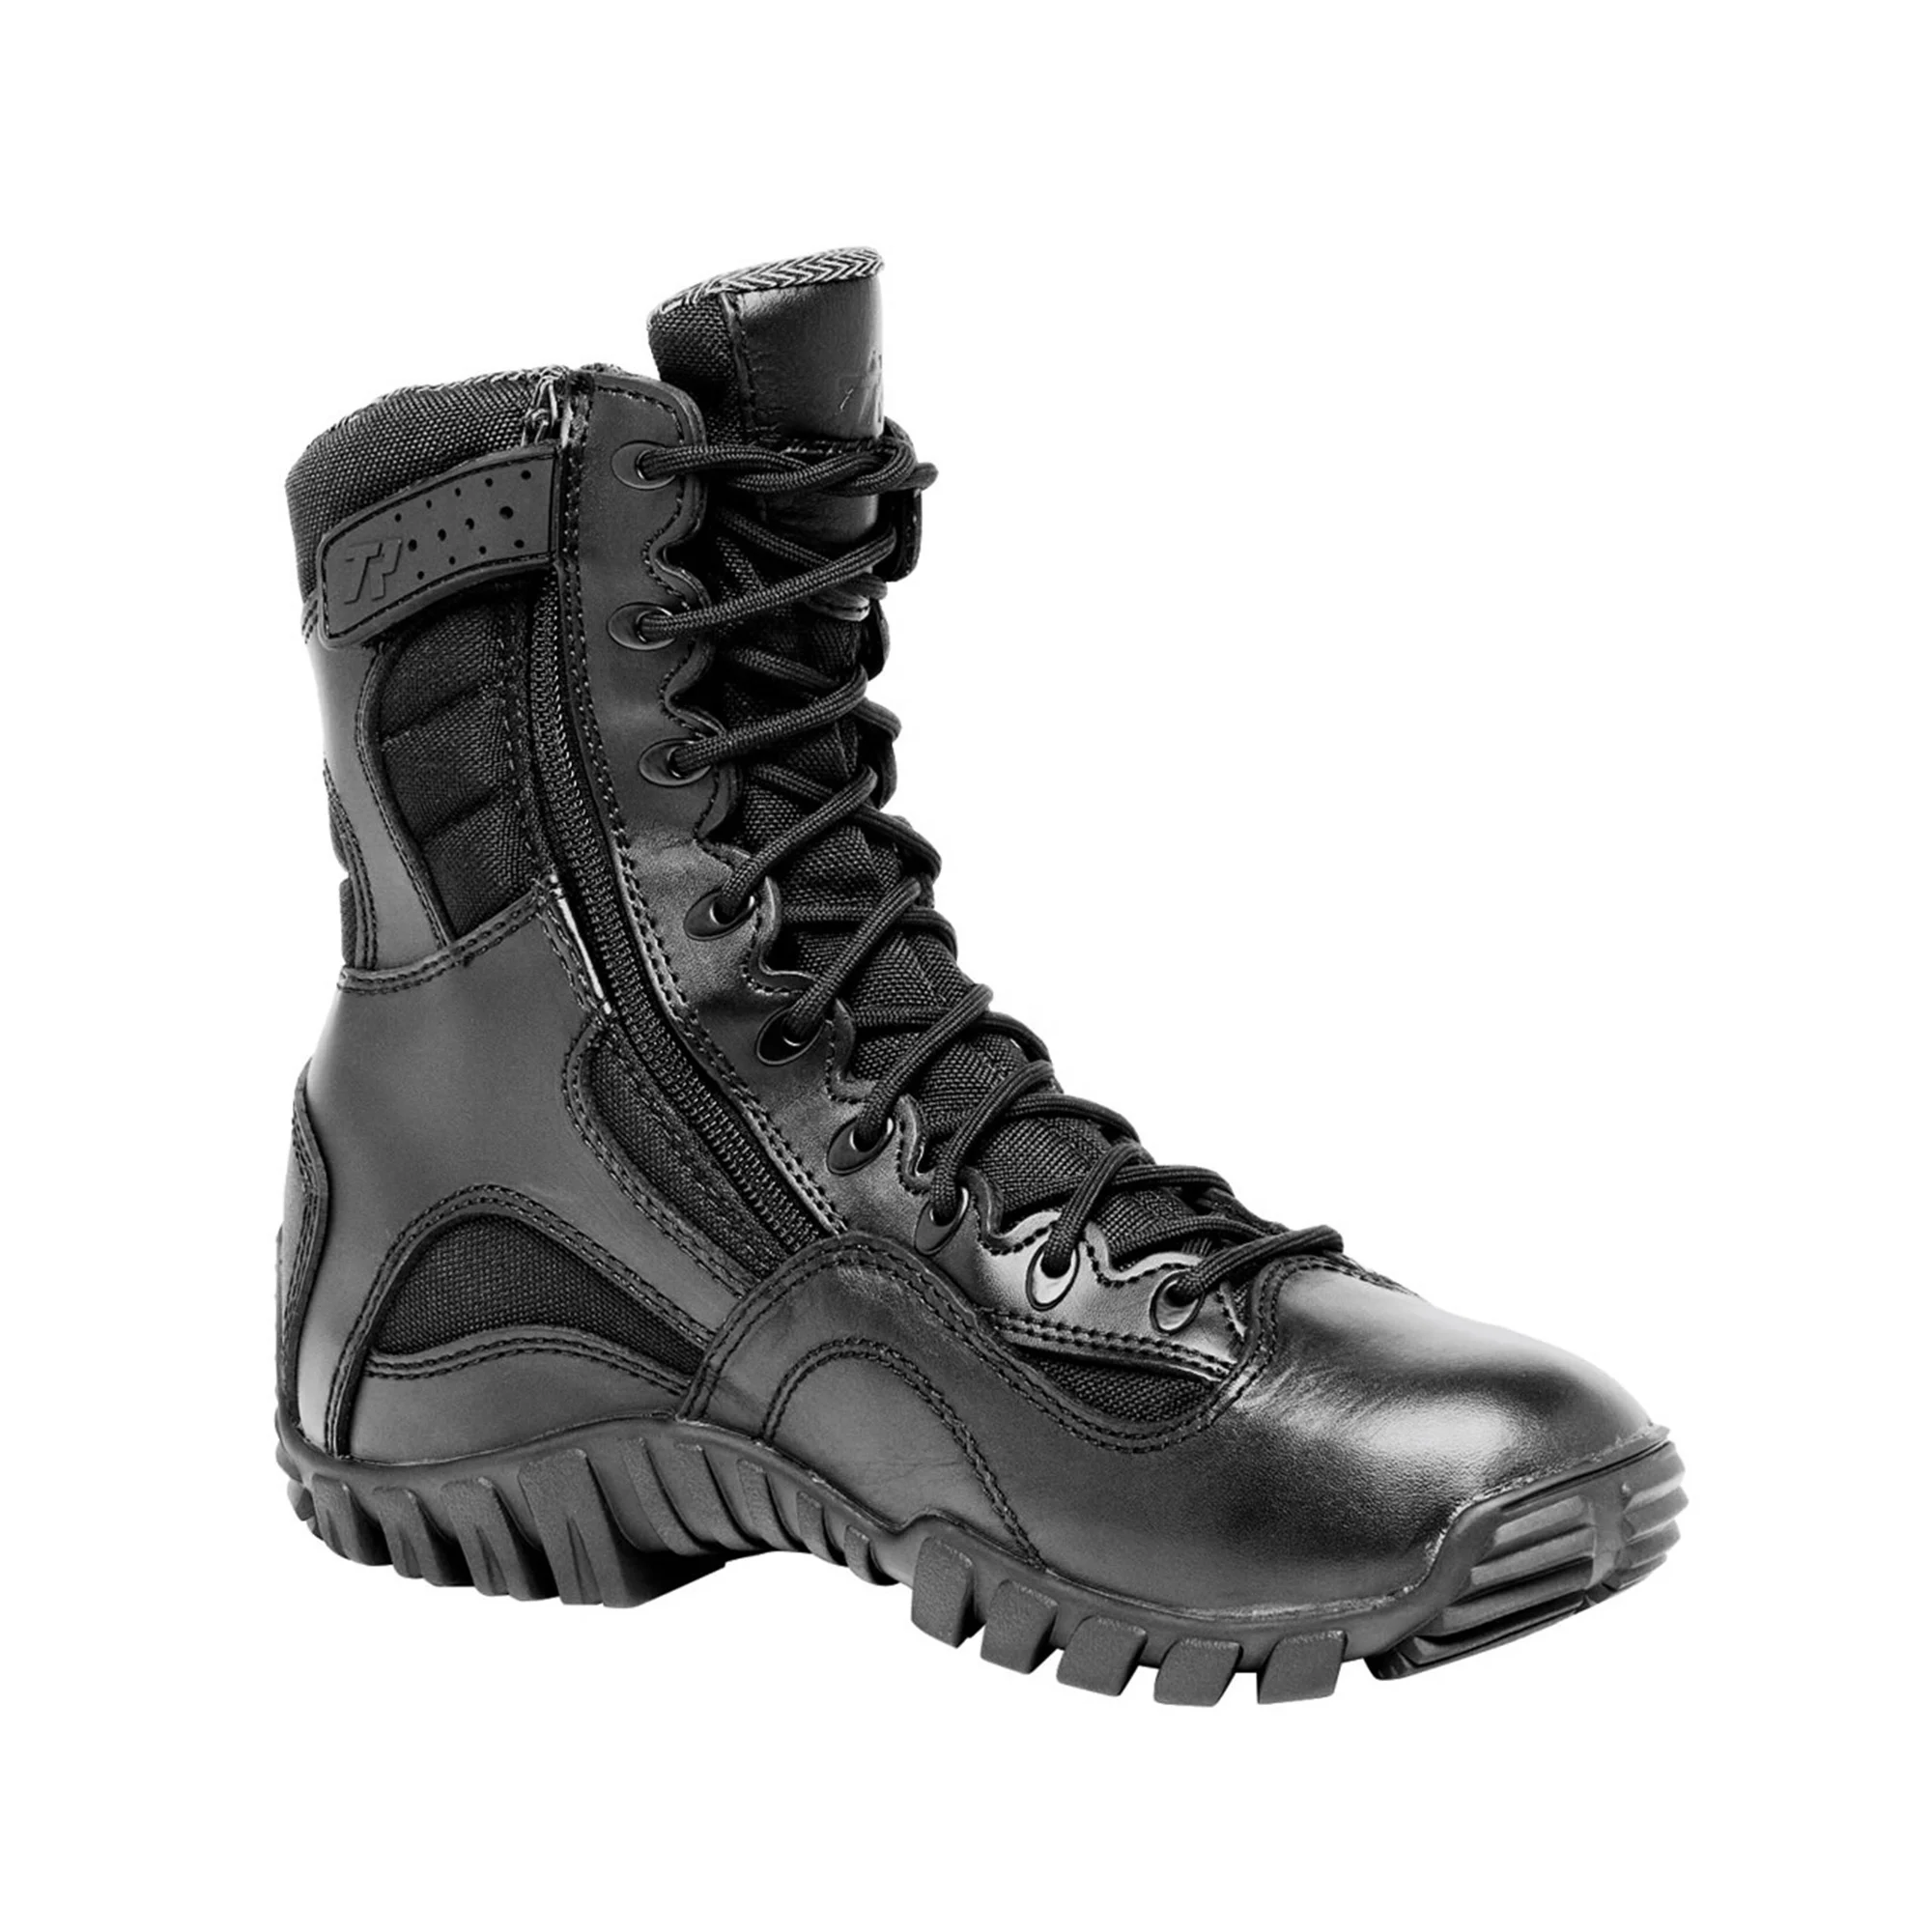 slip resistant boots for men